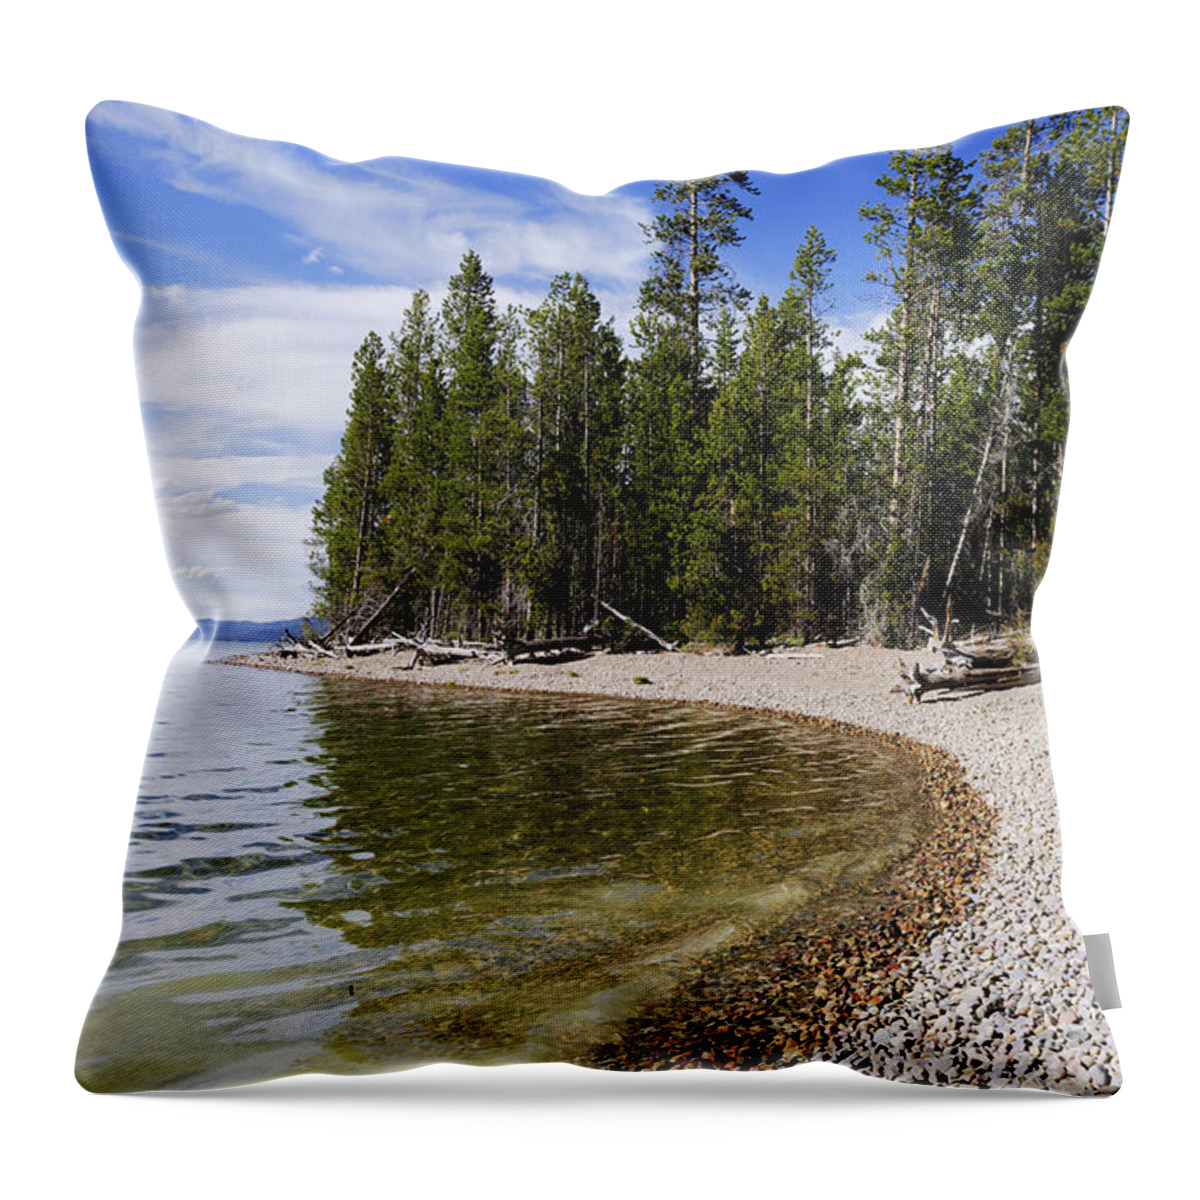 Teton Shore Throw Pillow featuring the photograph Teton Shore by Chad Dutson